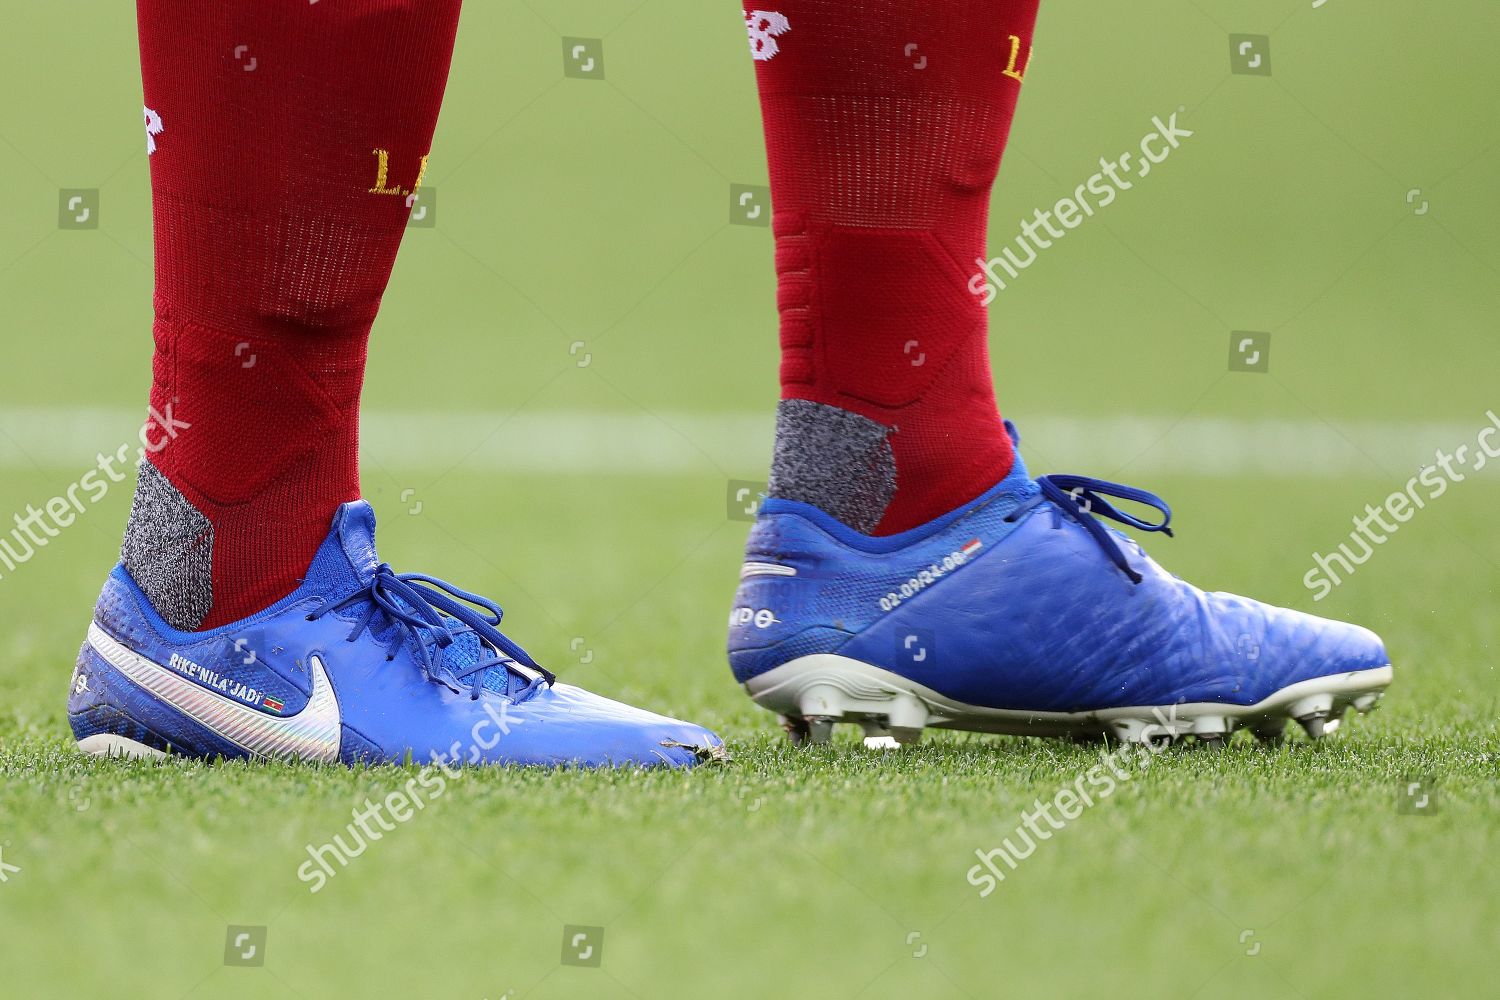 personalise football boots Virgil van 